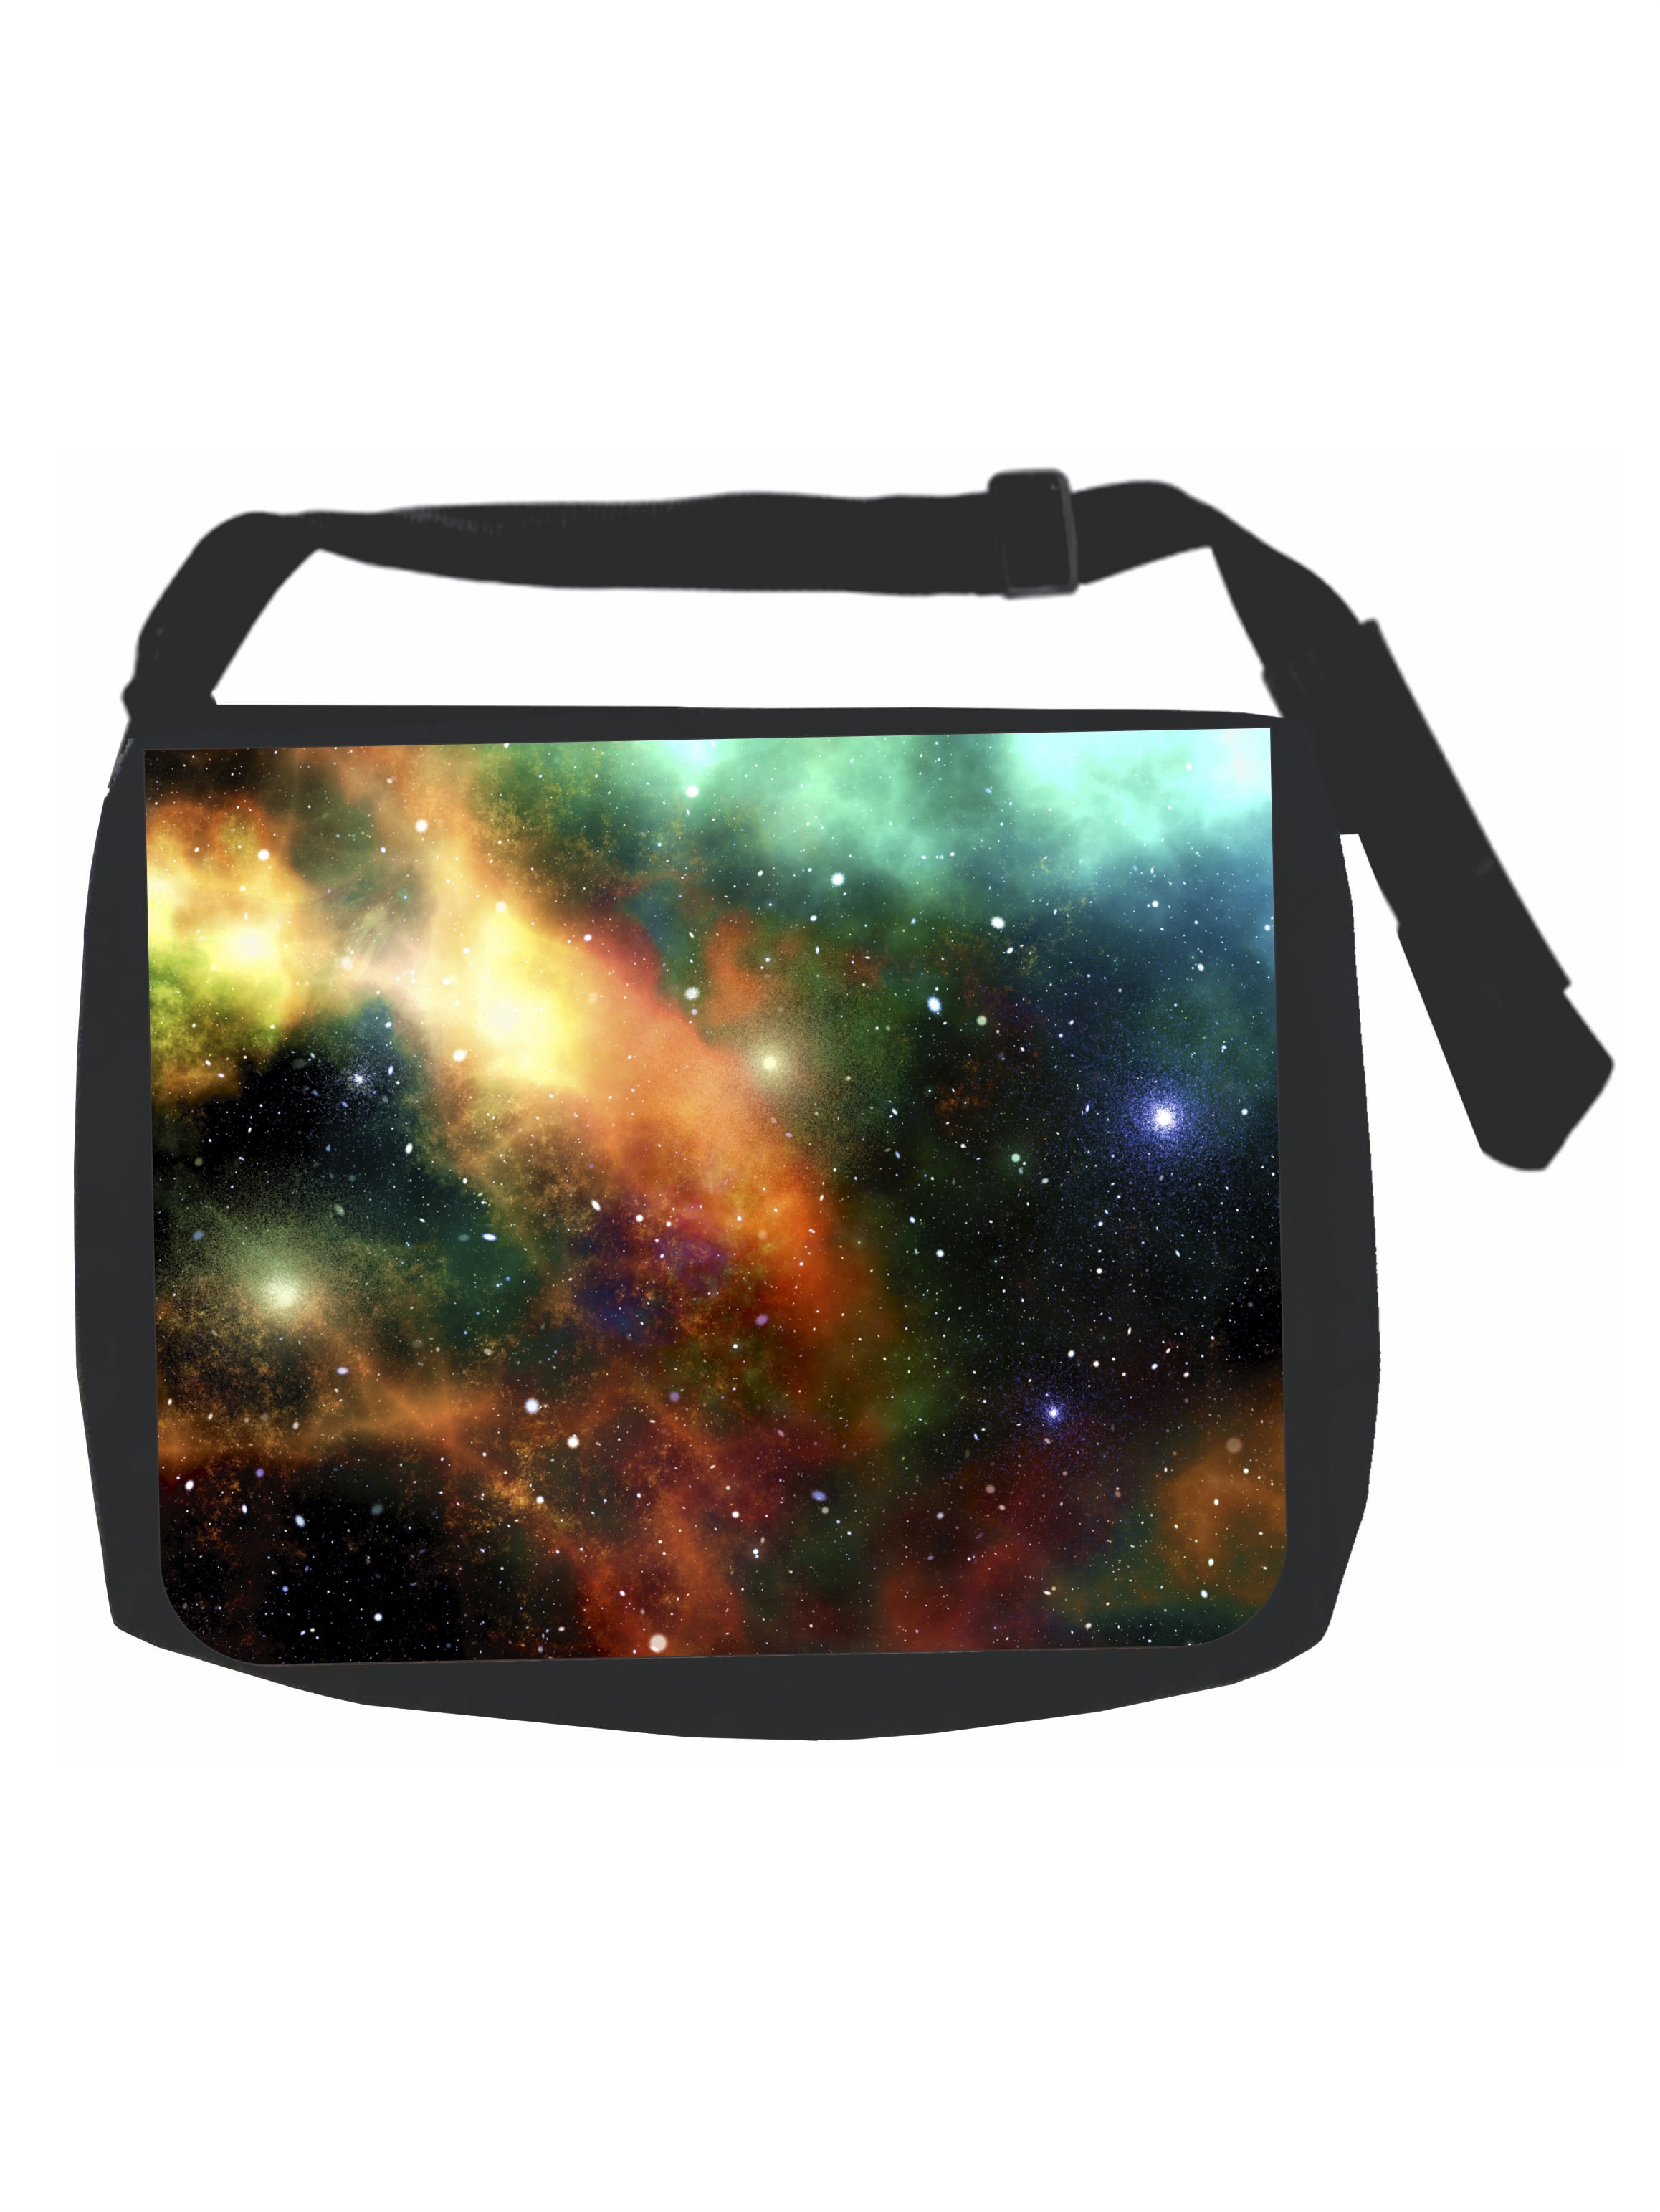 Space Planet Galaxy Business Briefcase Laptop Sleeve Bag/Handbag 13/15 Inch 